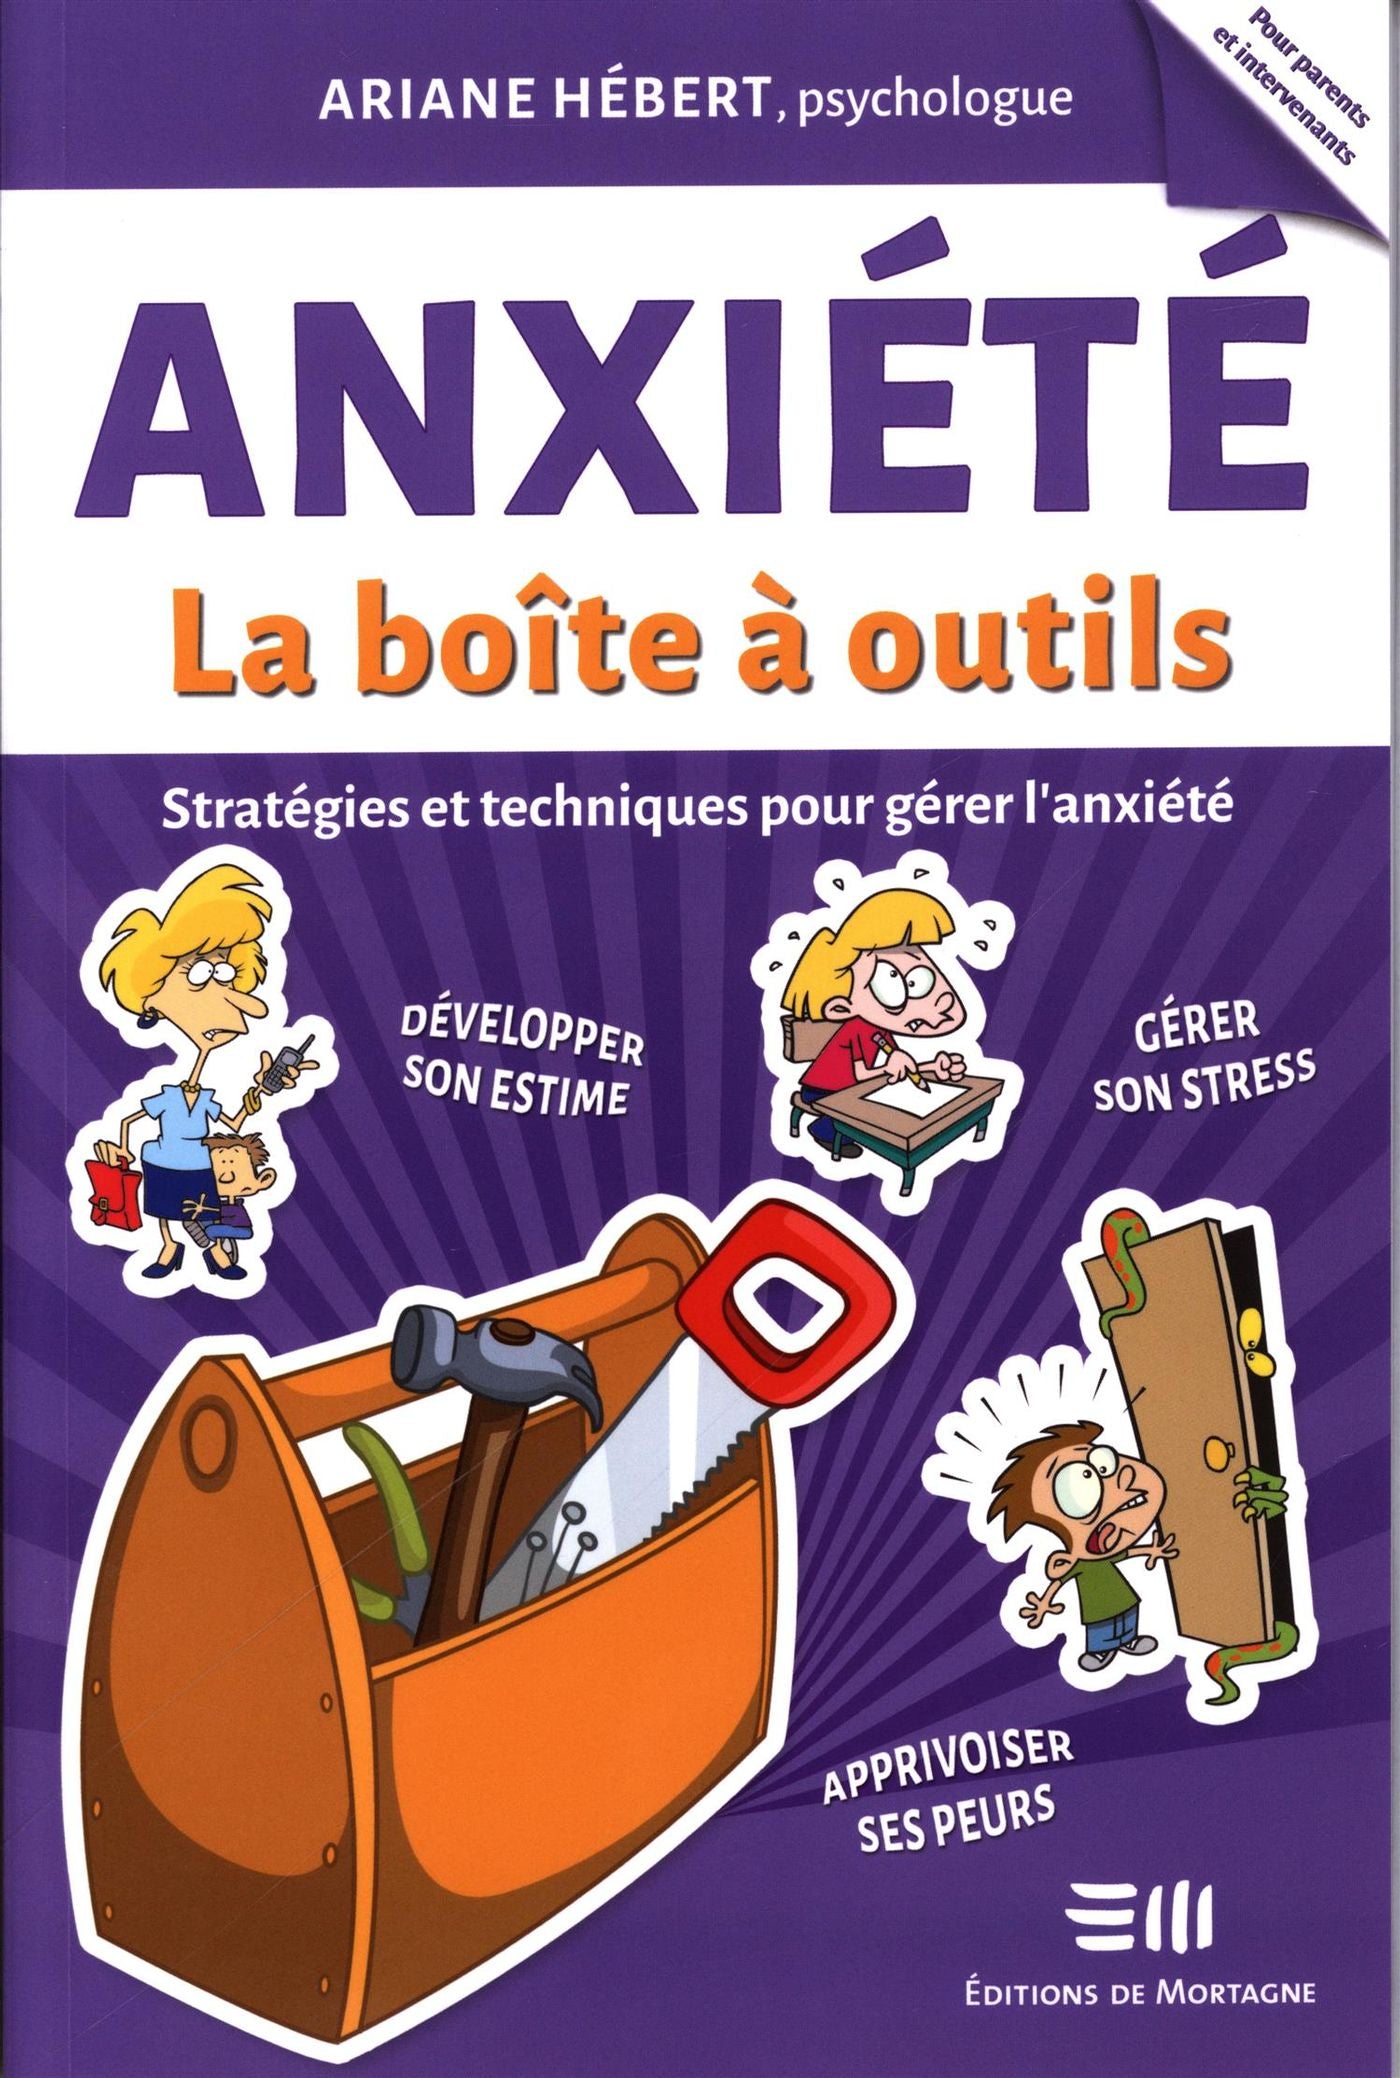 Anxiété : La boîte à outils - Ariane Hébert